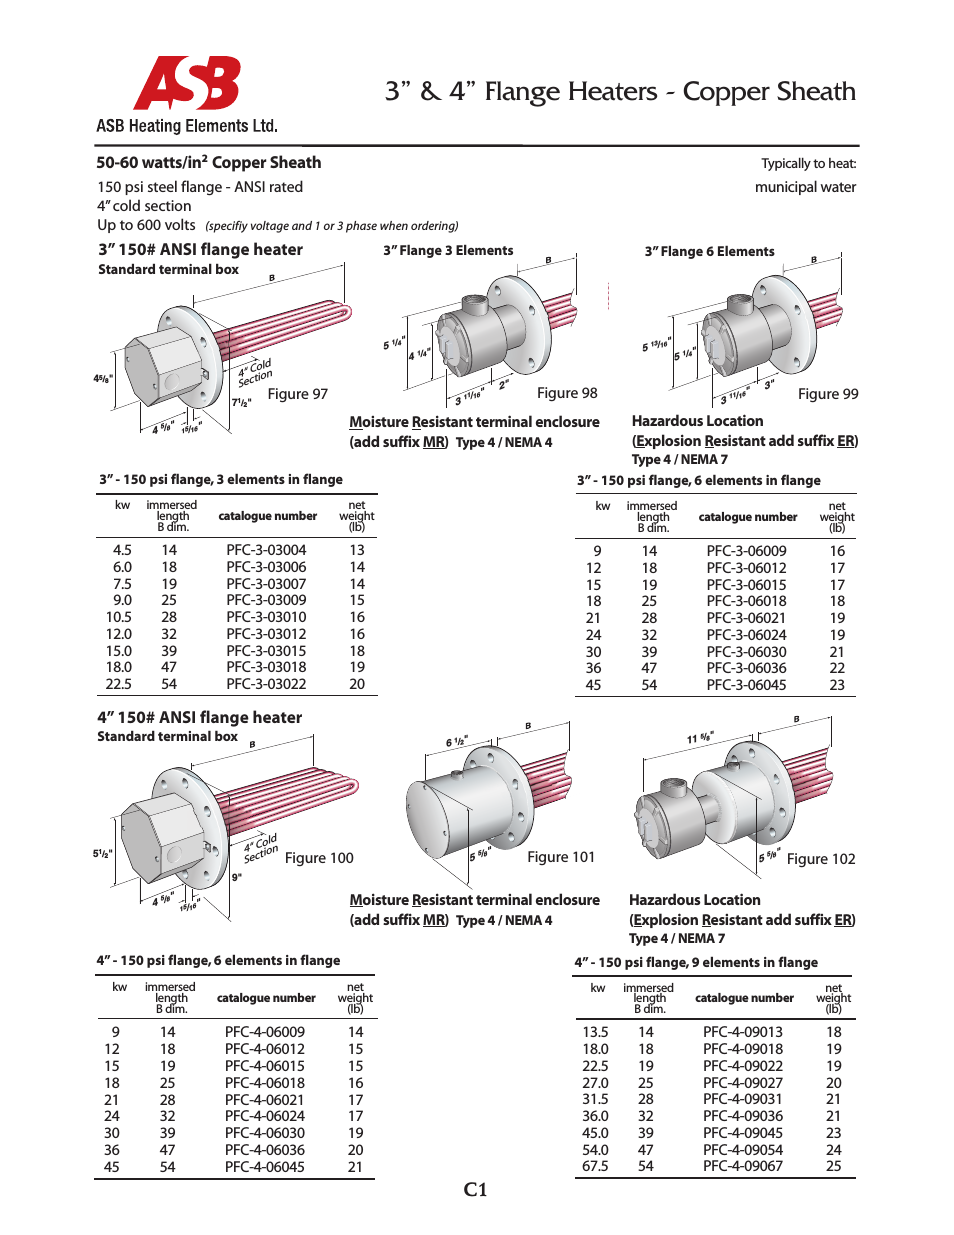 3” & 4” Flange Heaters - 50-60 watts - Copper Sheath